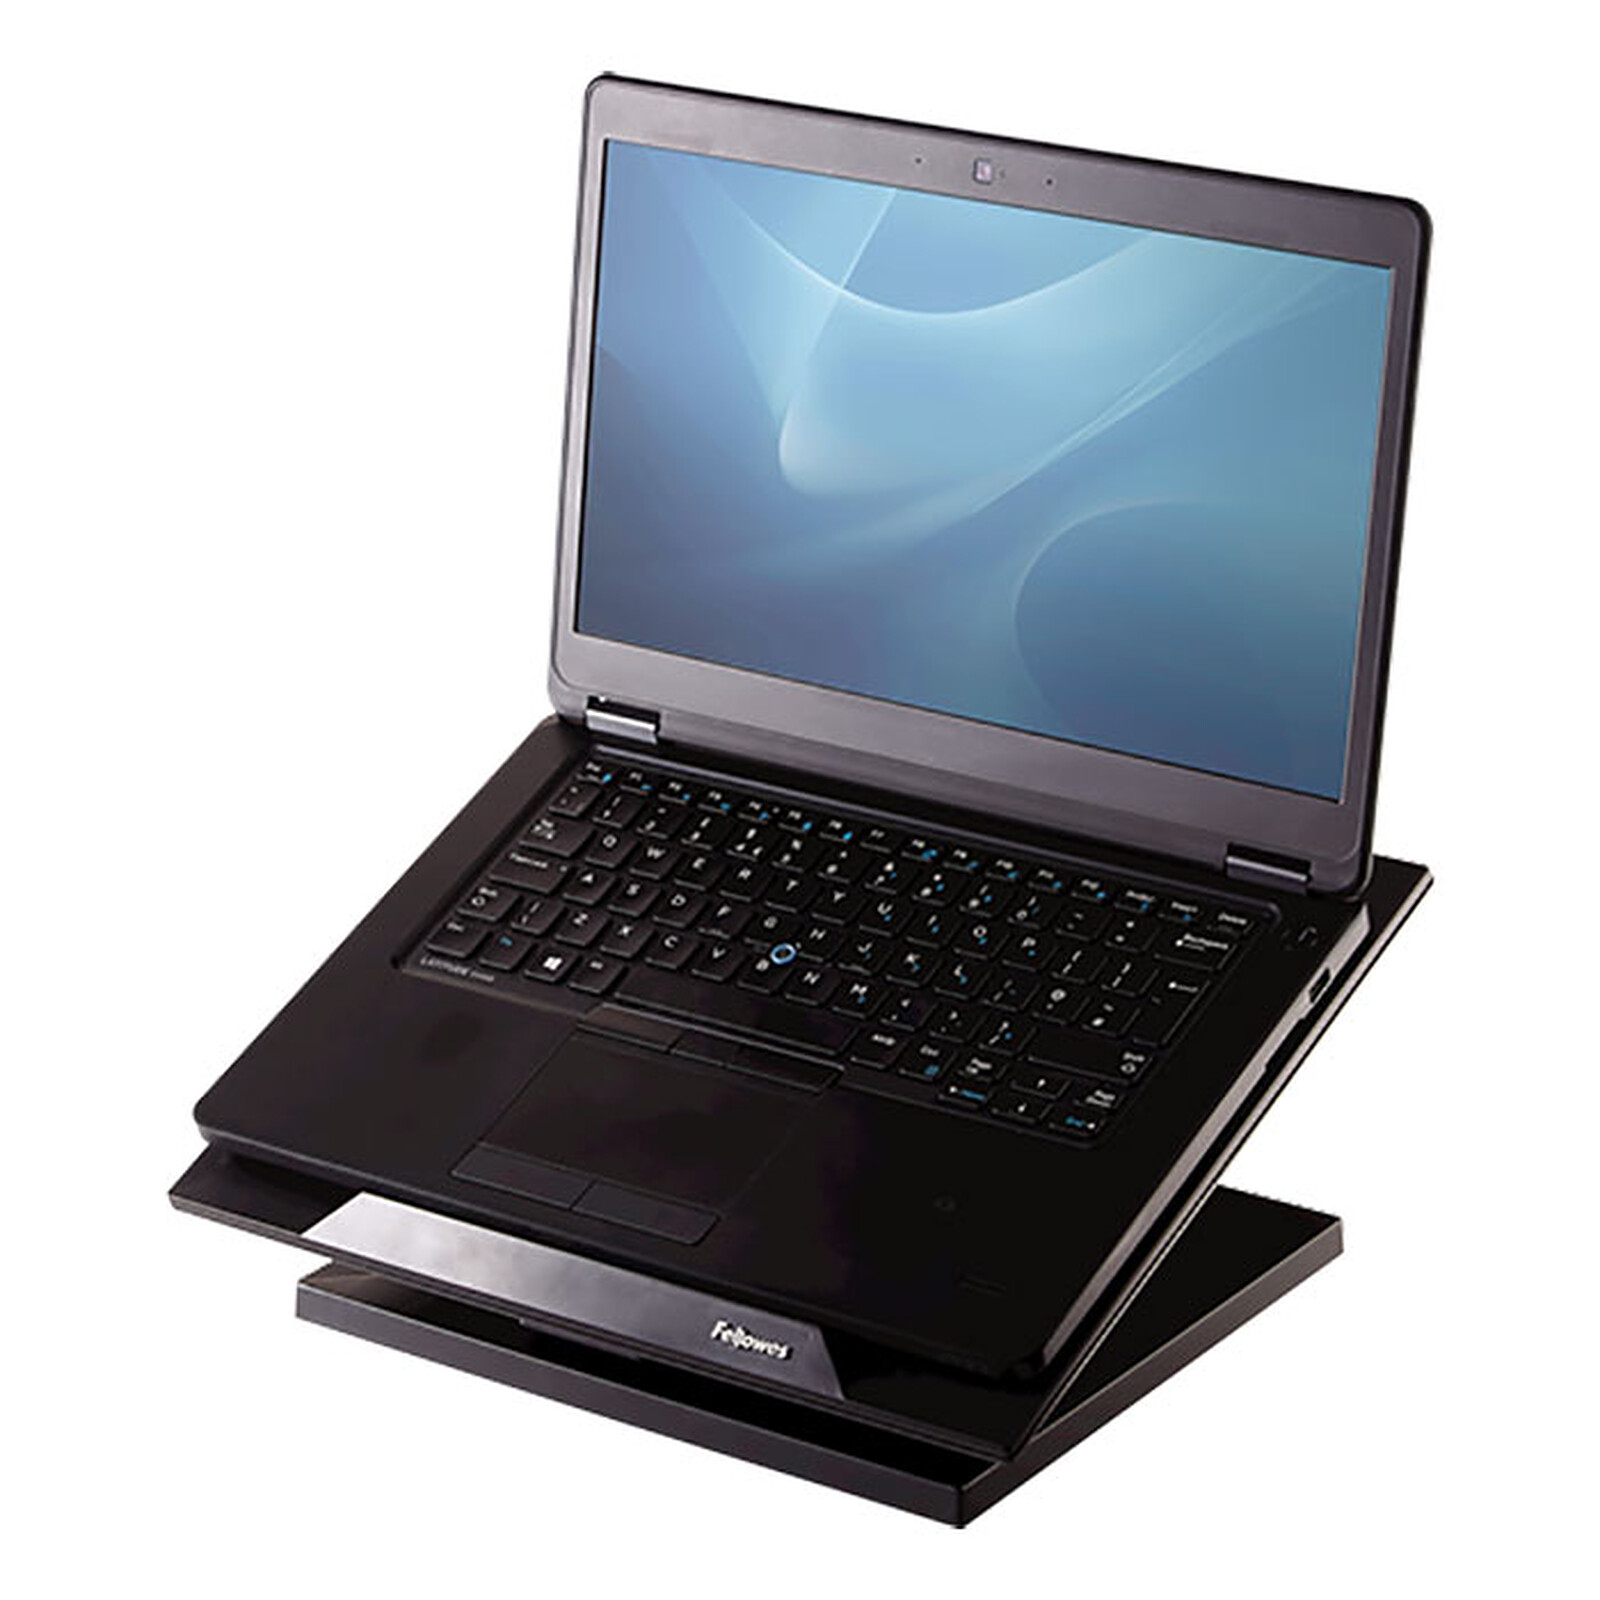 Supporto PC portatile Fellowes Office Suites regolabile